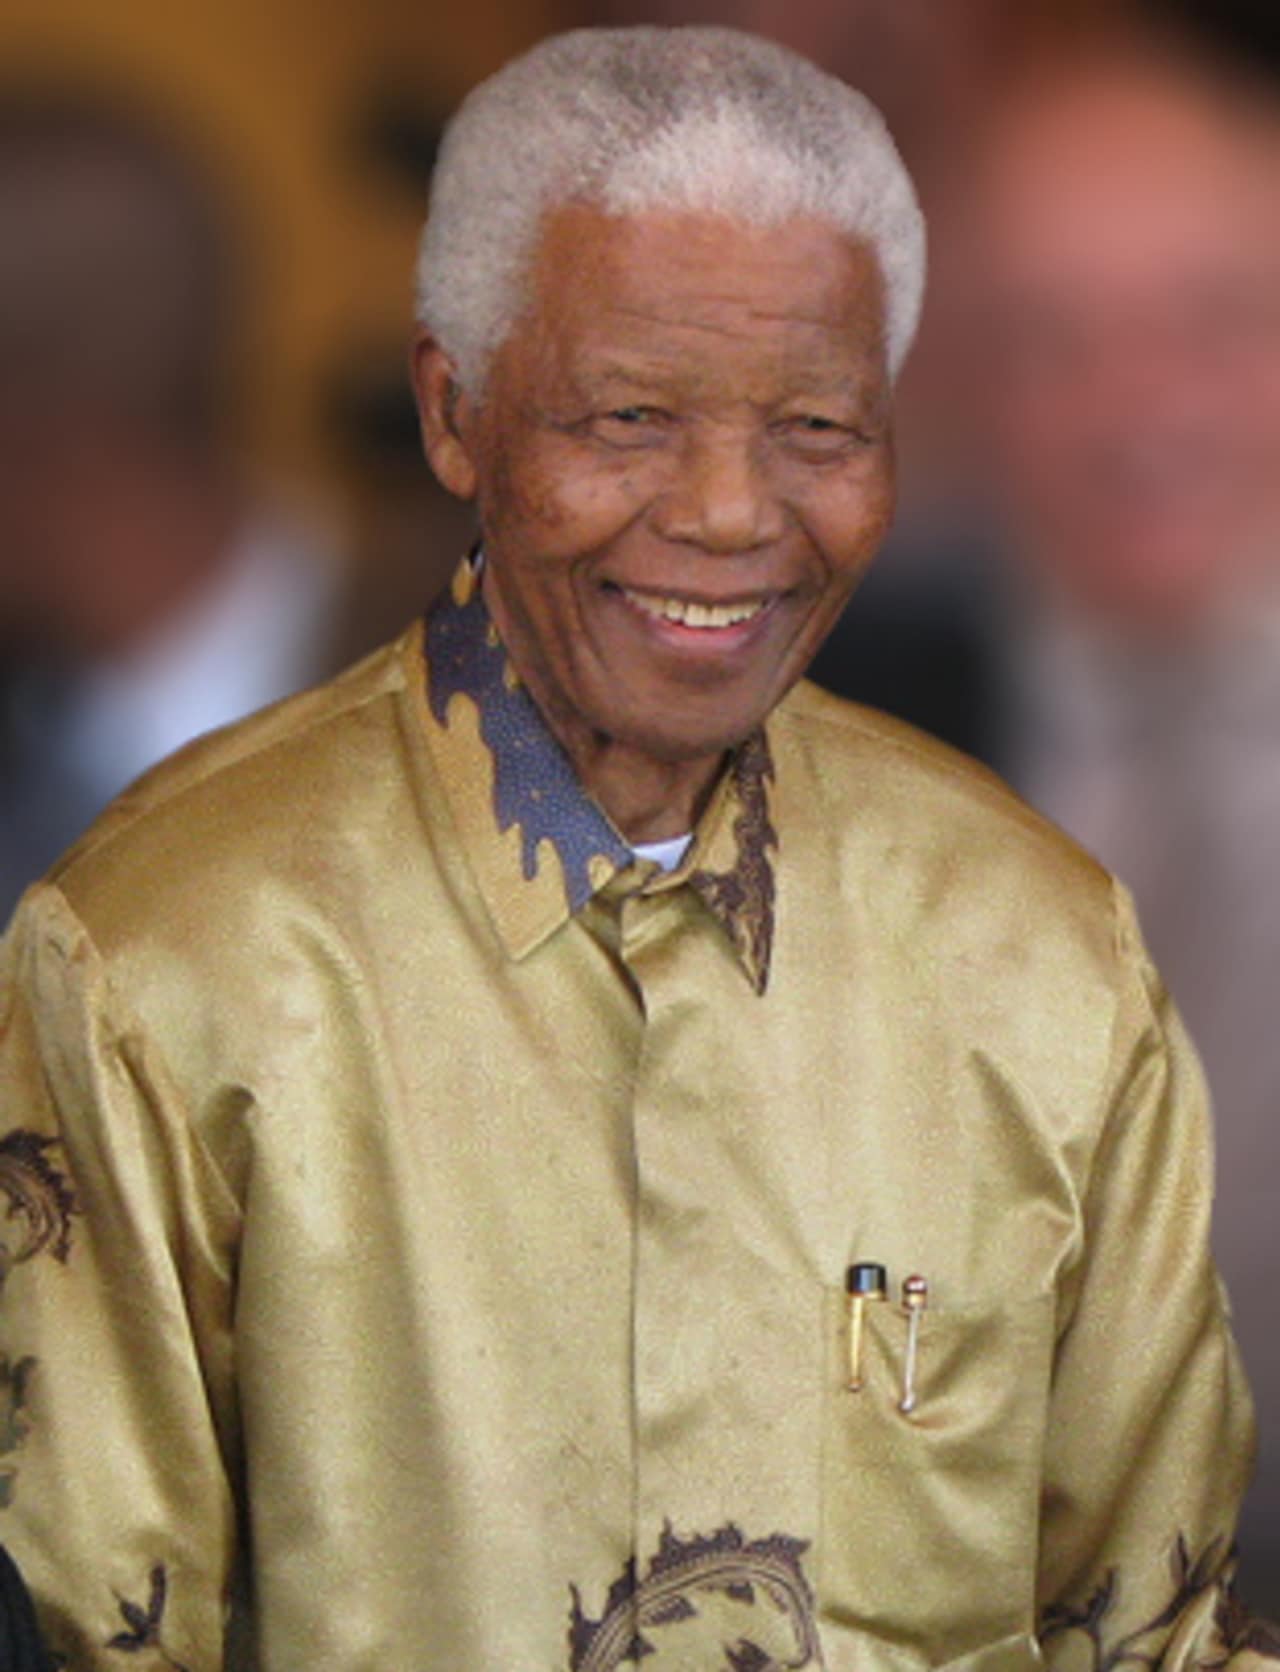 International Nelson Mandela Day is celebrated annually on July 18, Nelson Mandela's birthday.